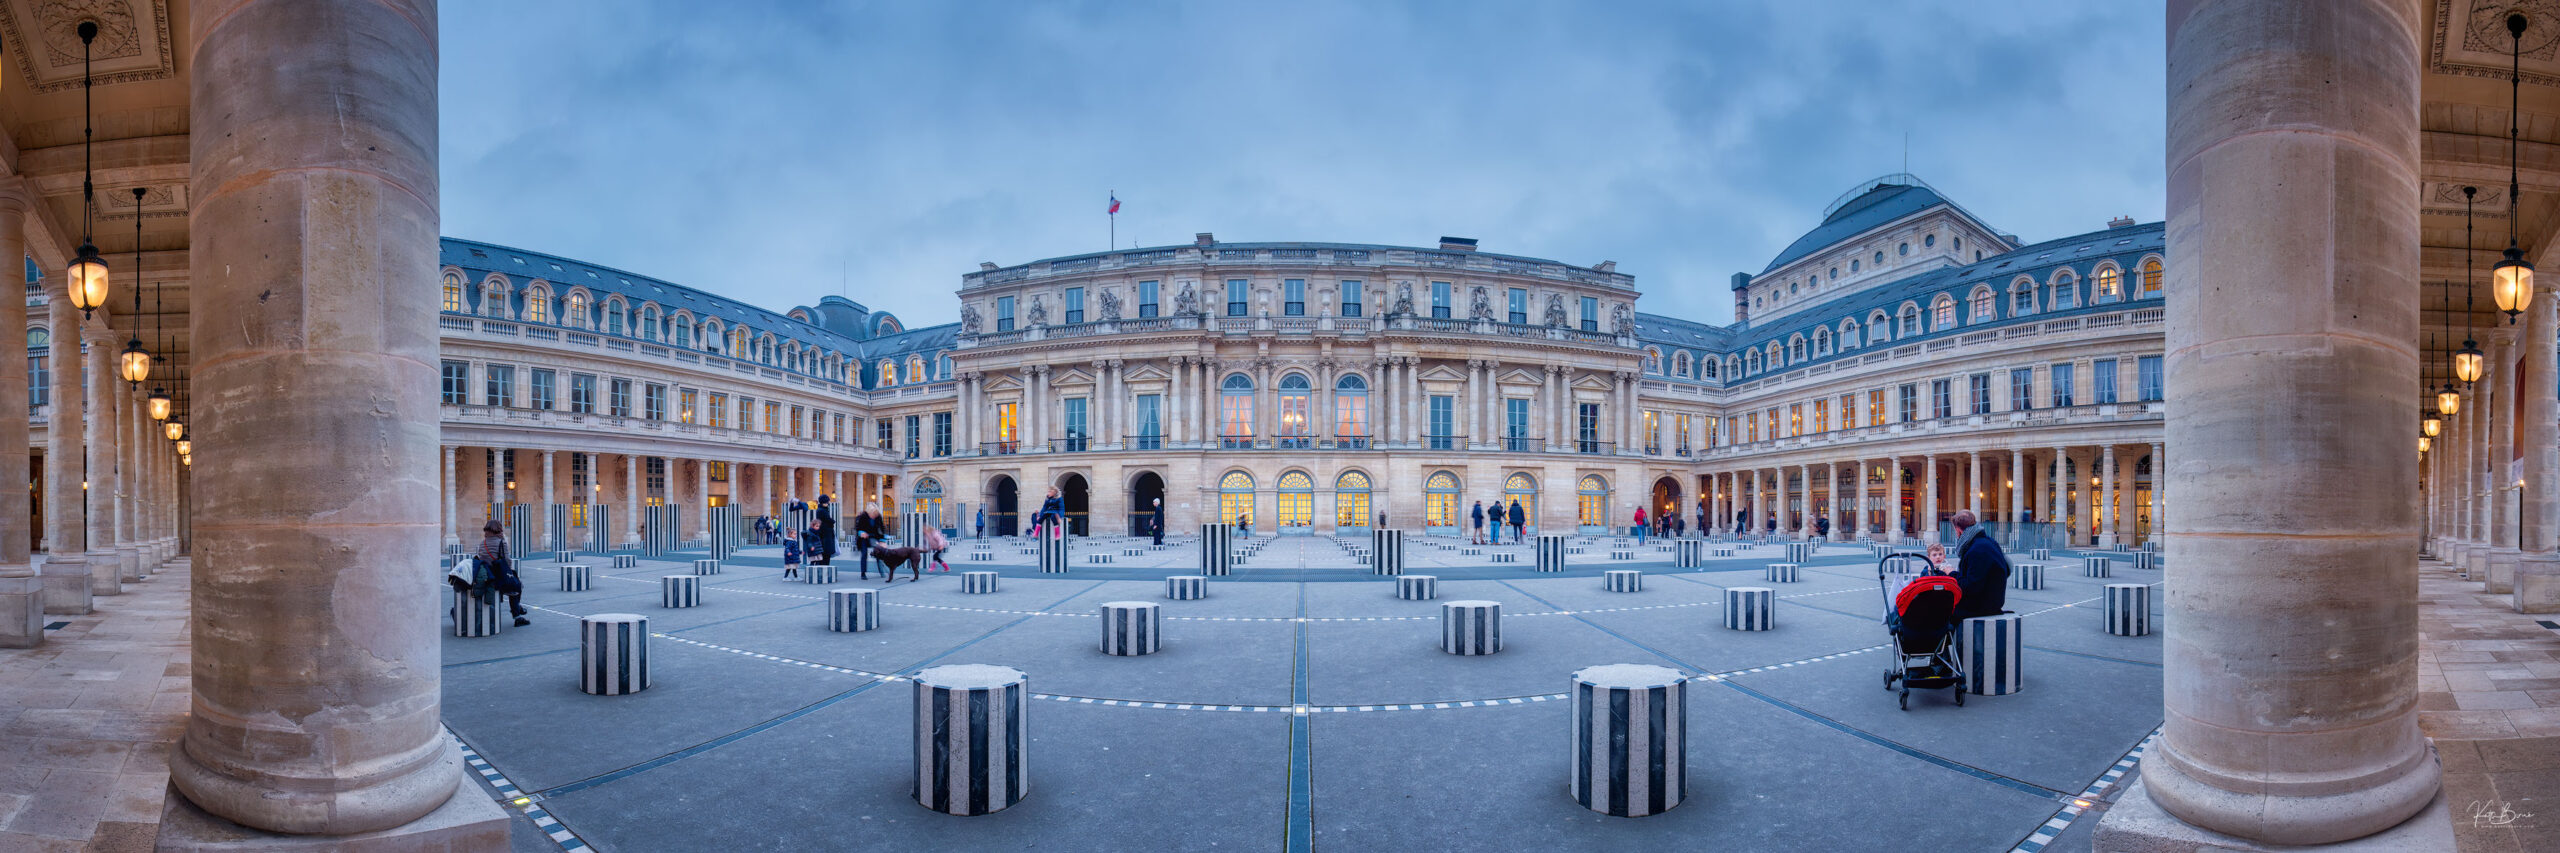 Palais royal paris panoramic view